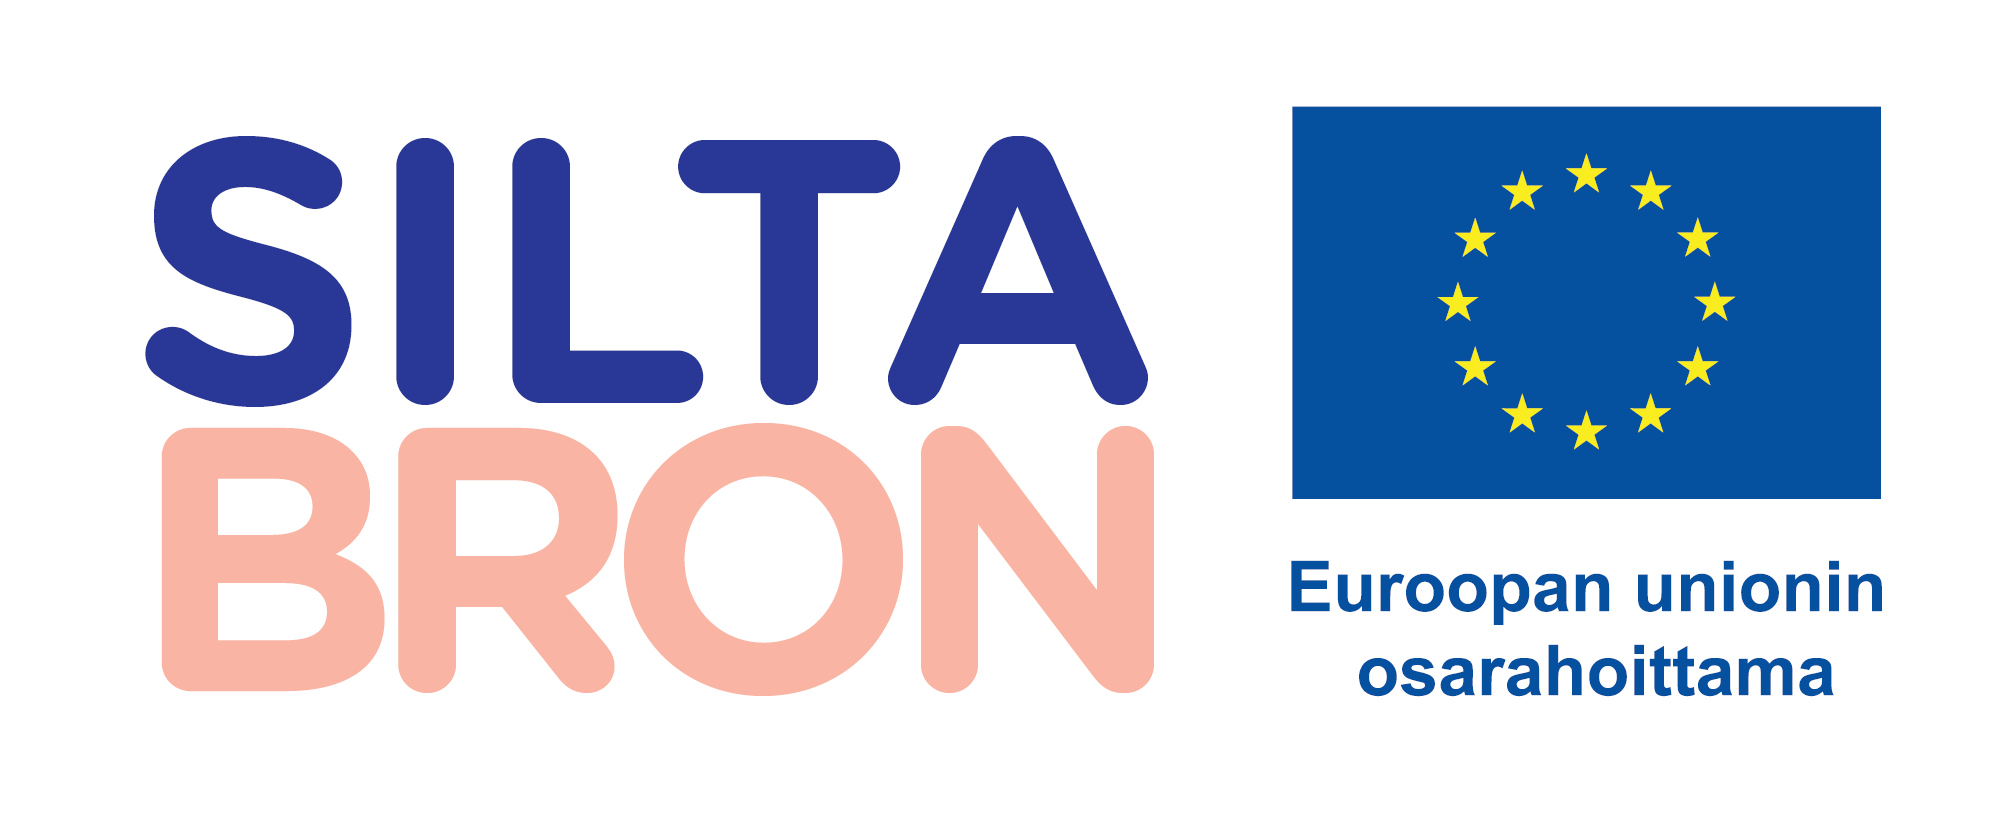 The logo of project Bridge. Text in logo is Silta, bron, Euroopan unionin osarahoittama. Picture of EU-flag.